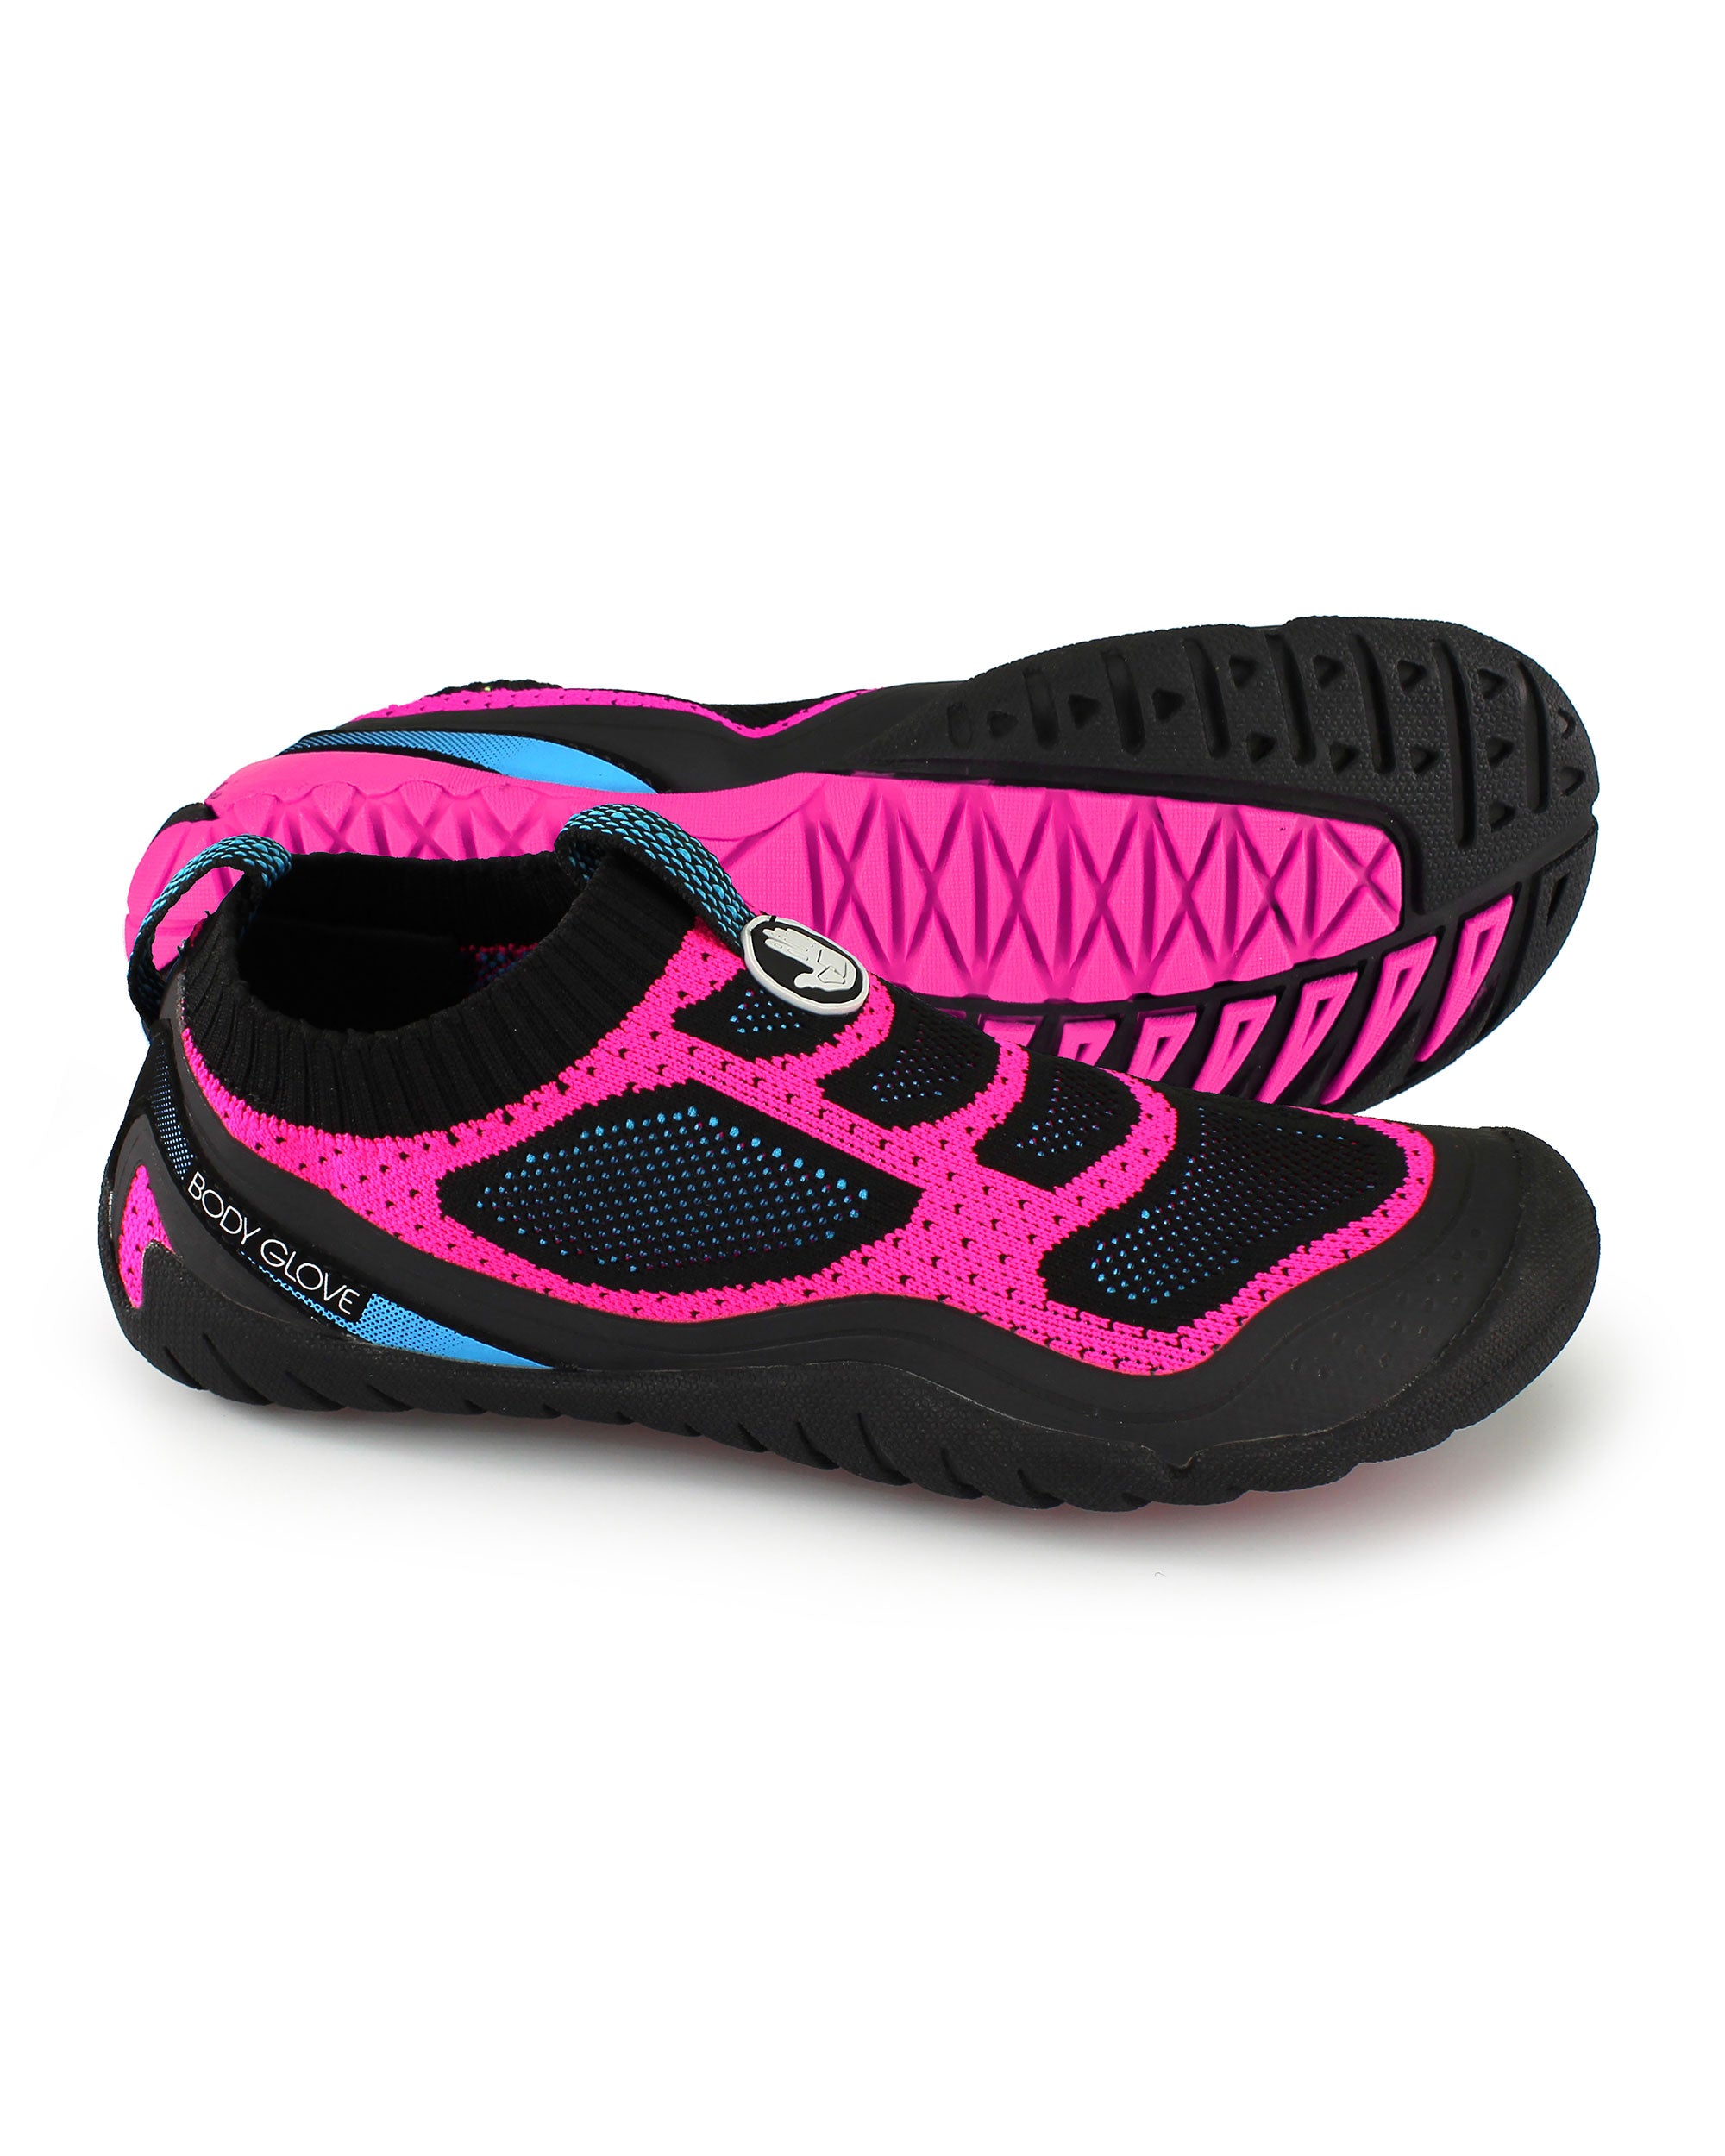 Women's Aeon Water Shoes - Neon Pink 